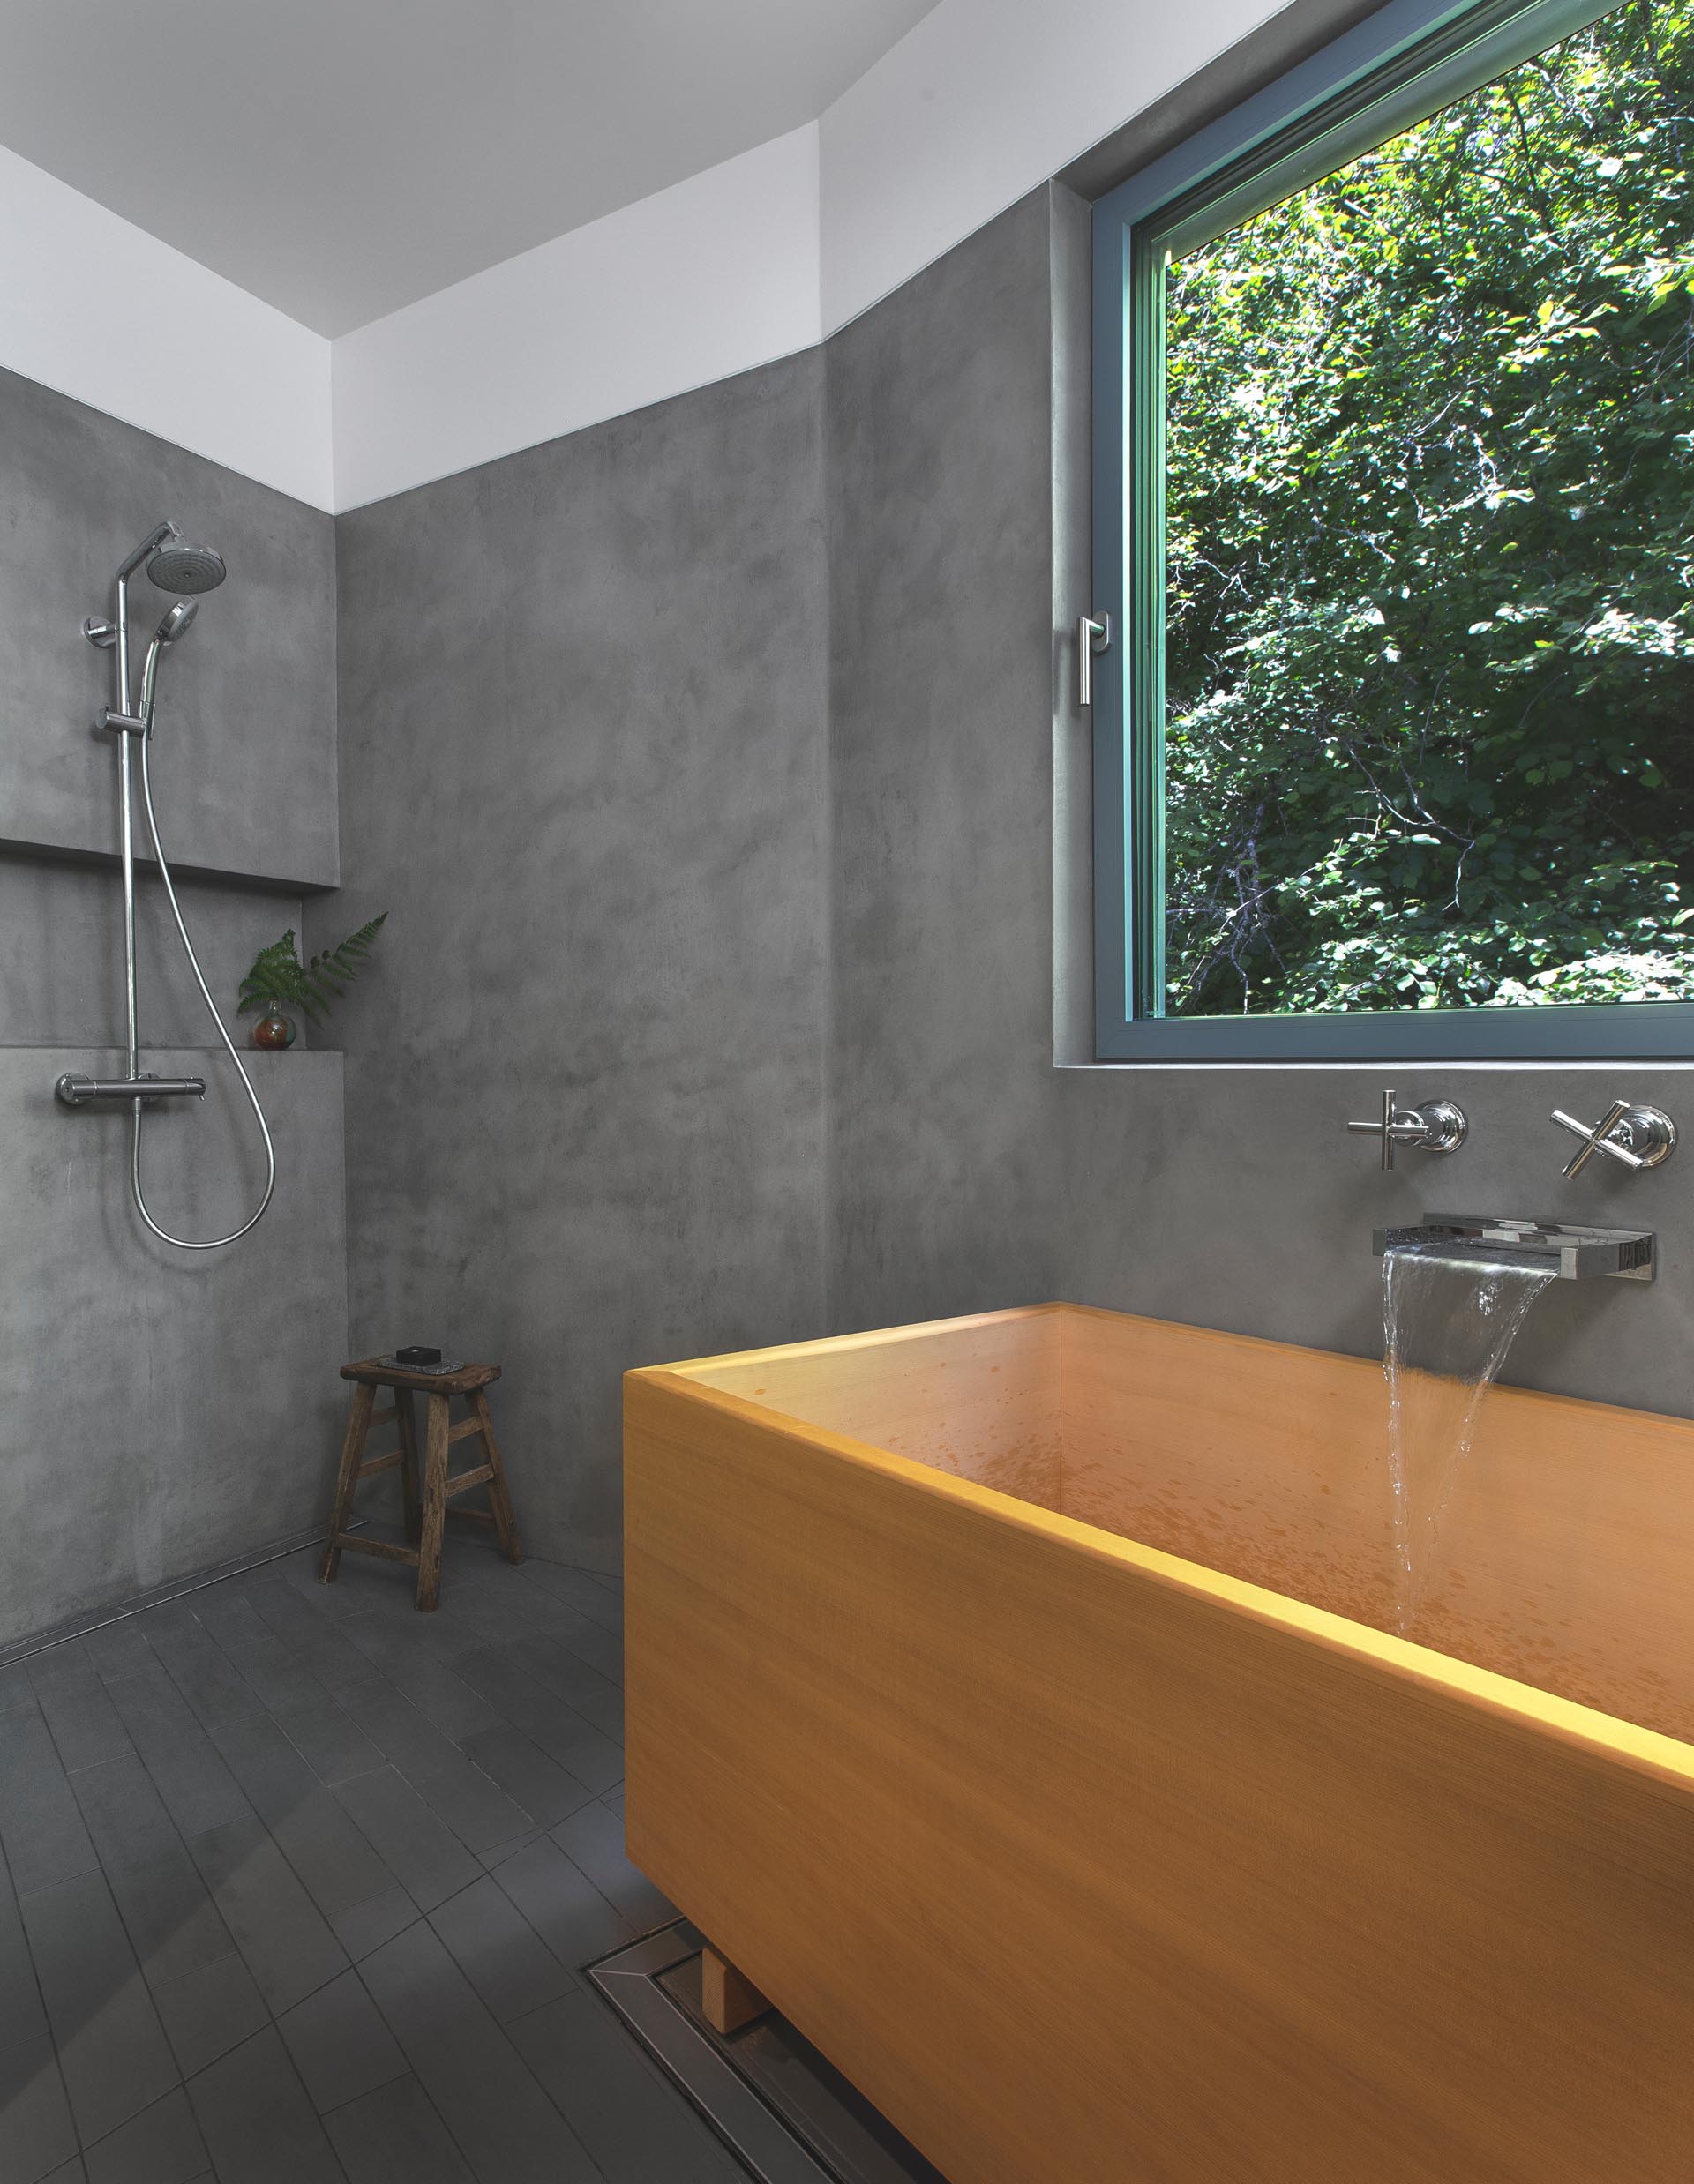 A modern bathroom with dark gray walls and a wood Japanese soaking tub.